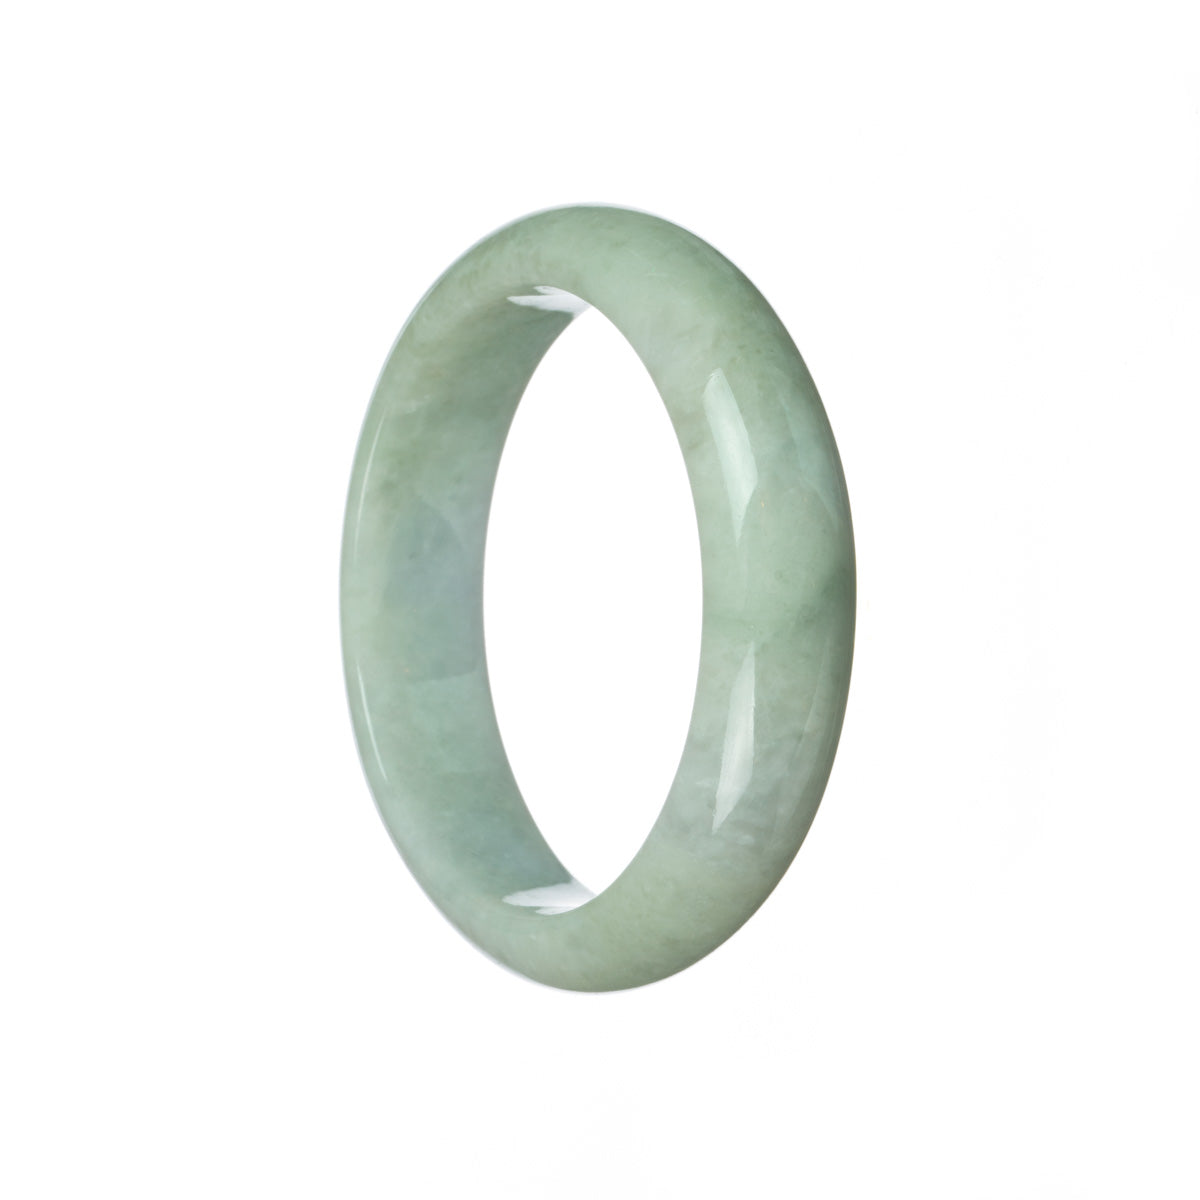 An elegant, pale green and lavender Burma Jade bangle bracelet with a half-moon shape measuring 59mm.